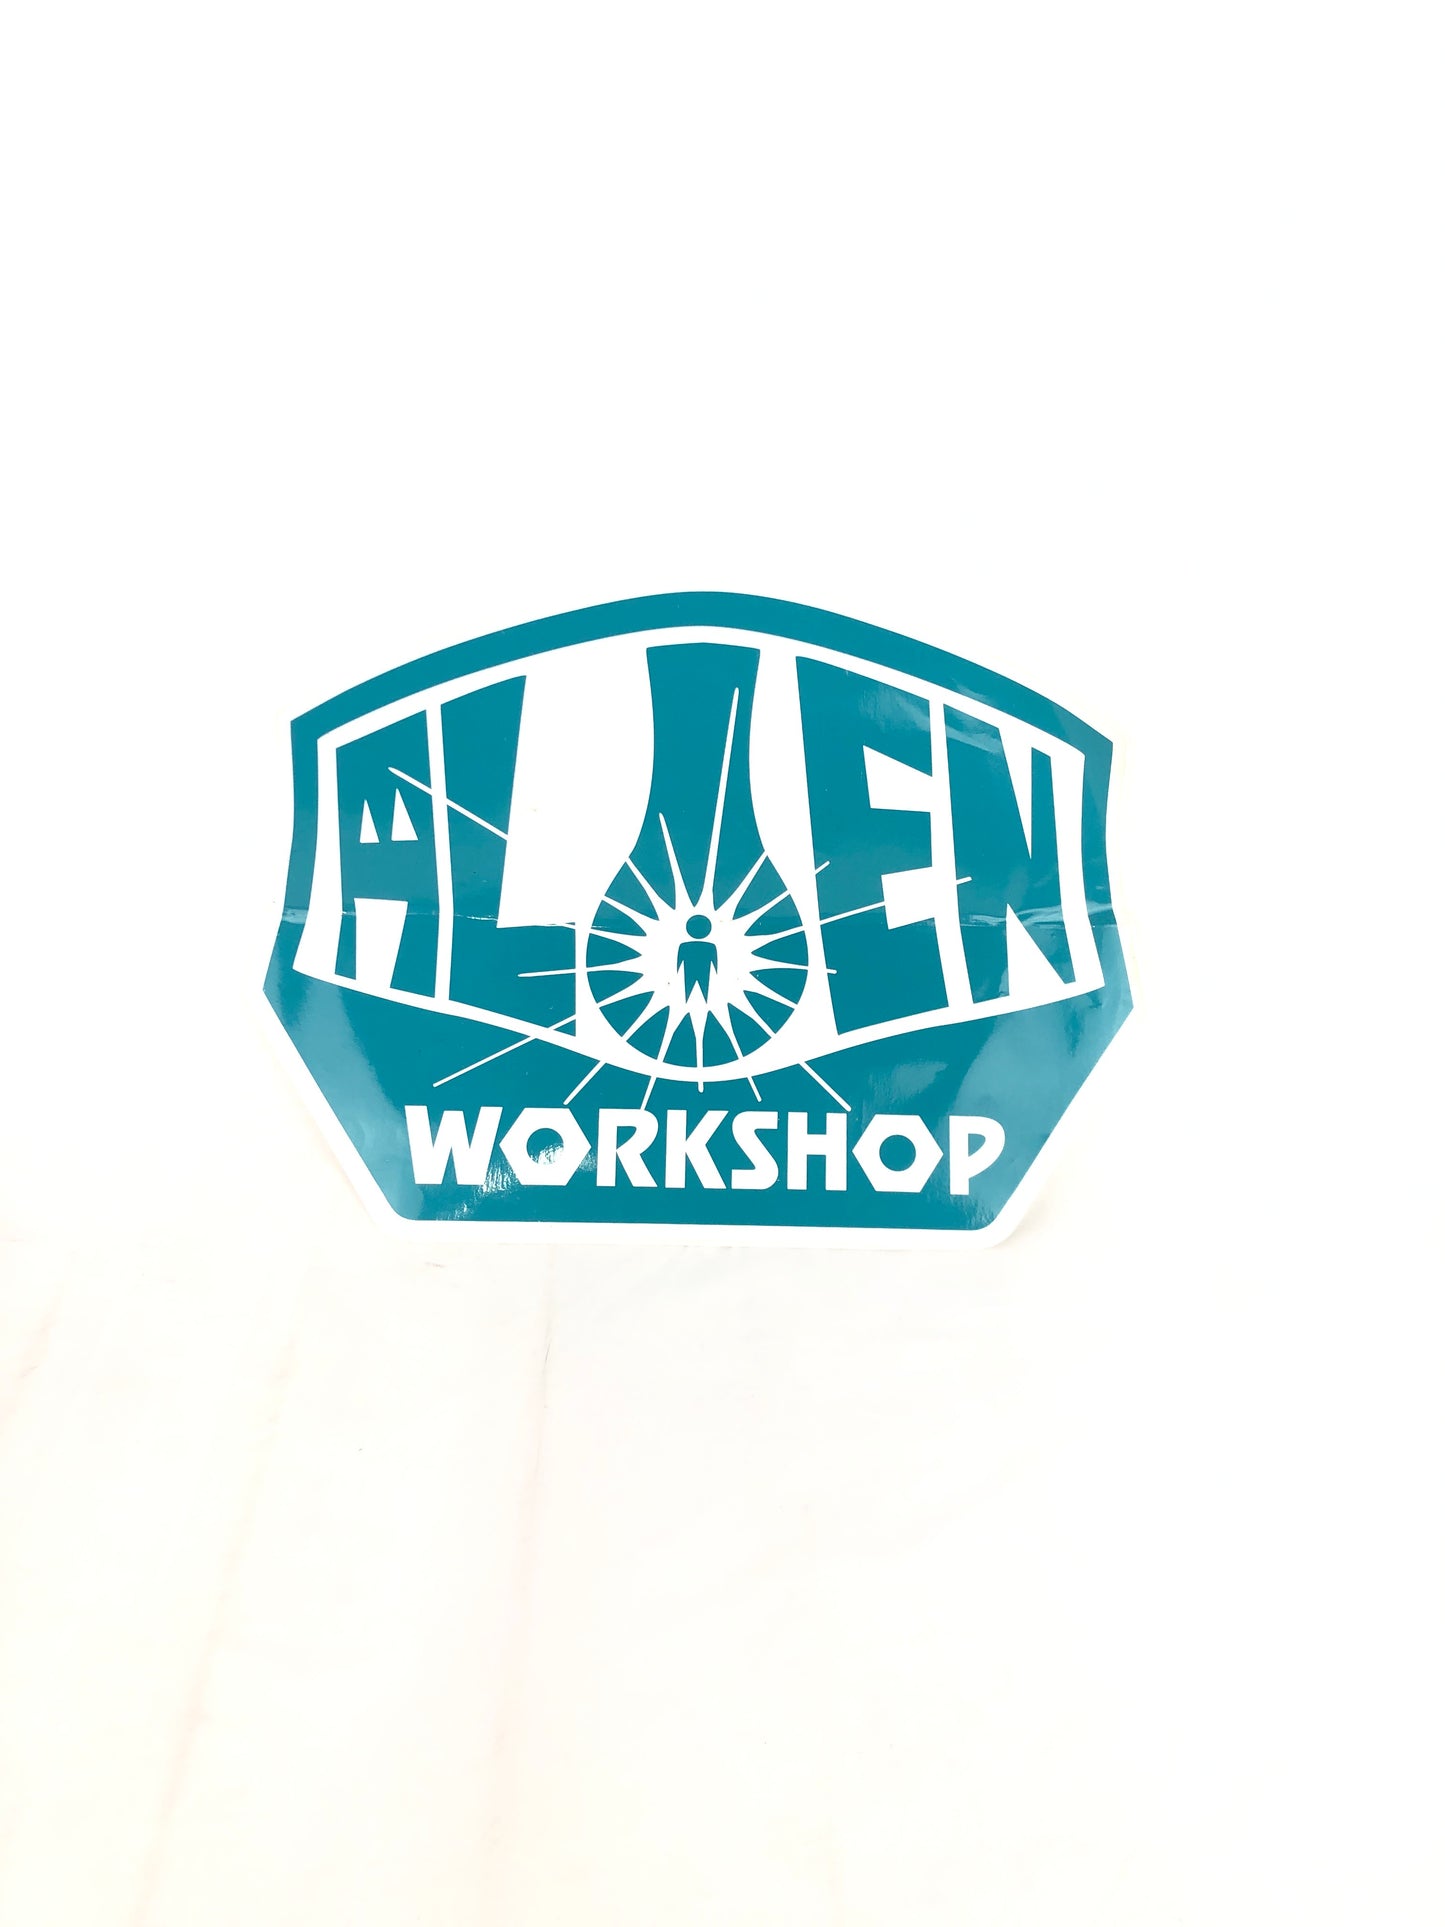 Alien Workshop White Teal 16" x 12" (Large) Sticker